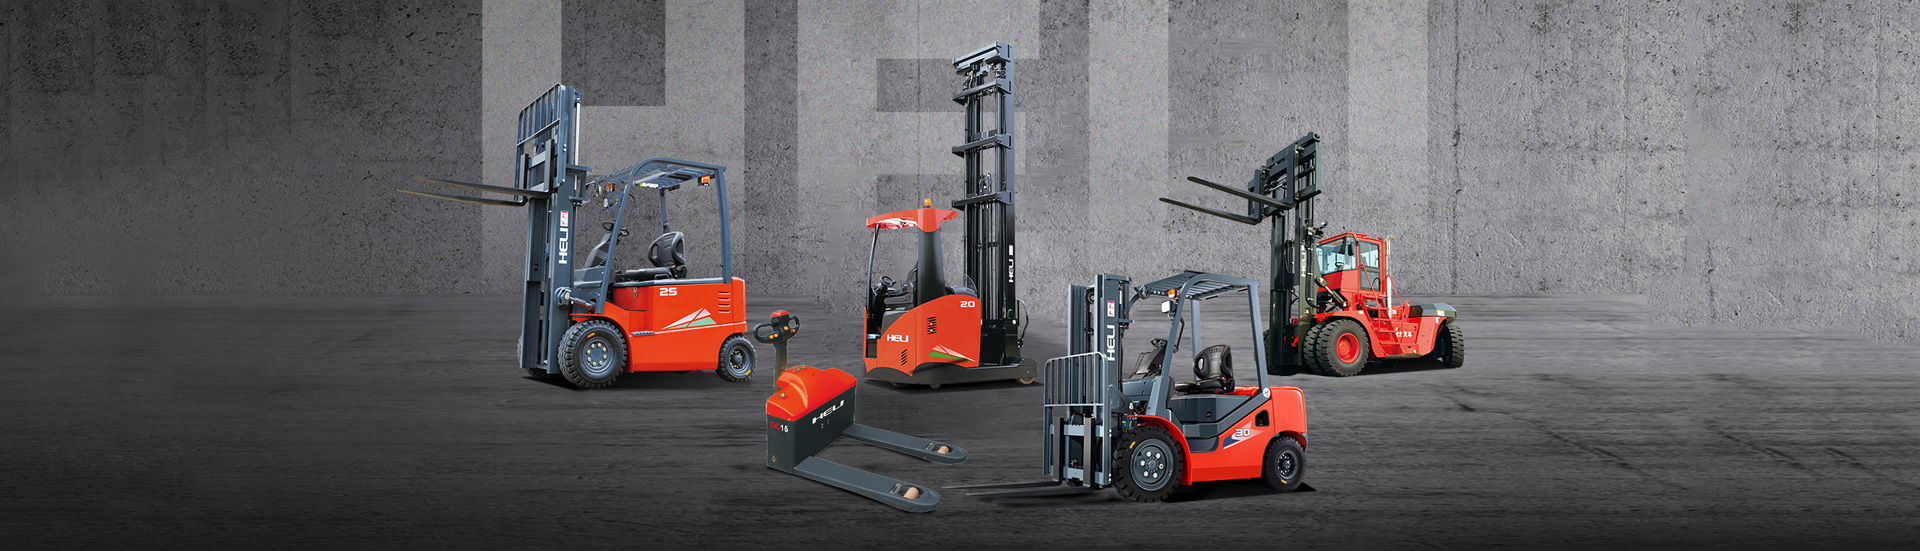 Electric Forklift Trucks Anhui Heli Industrial Vehicle Import Export Co Ltd